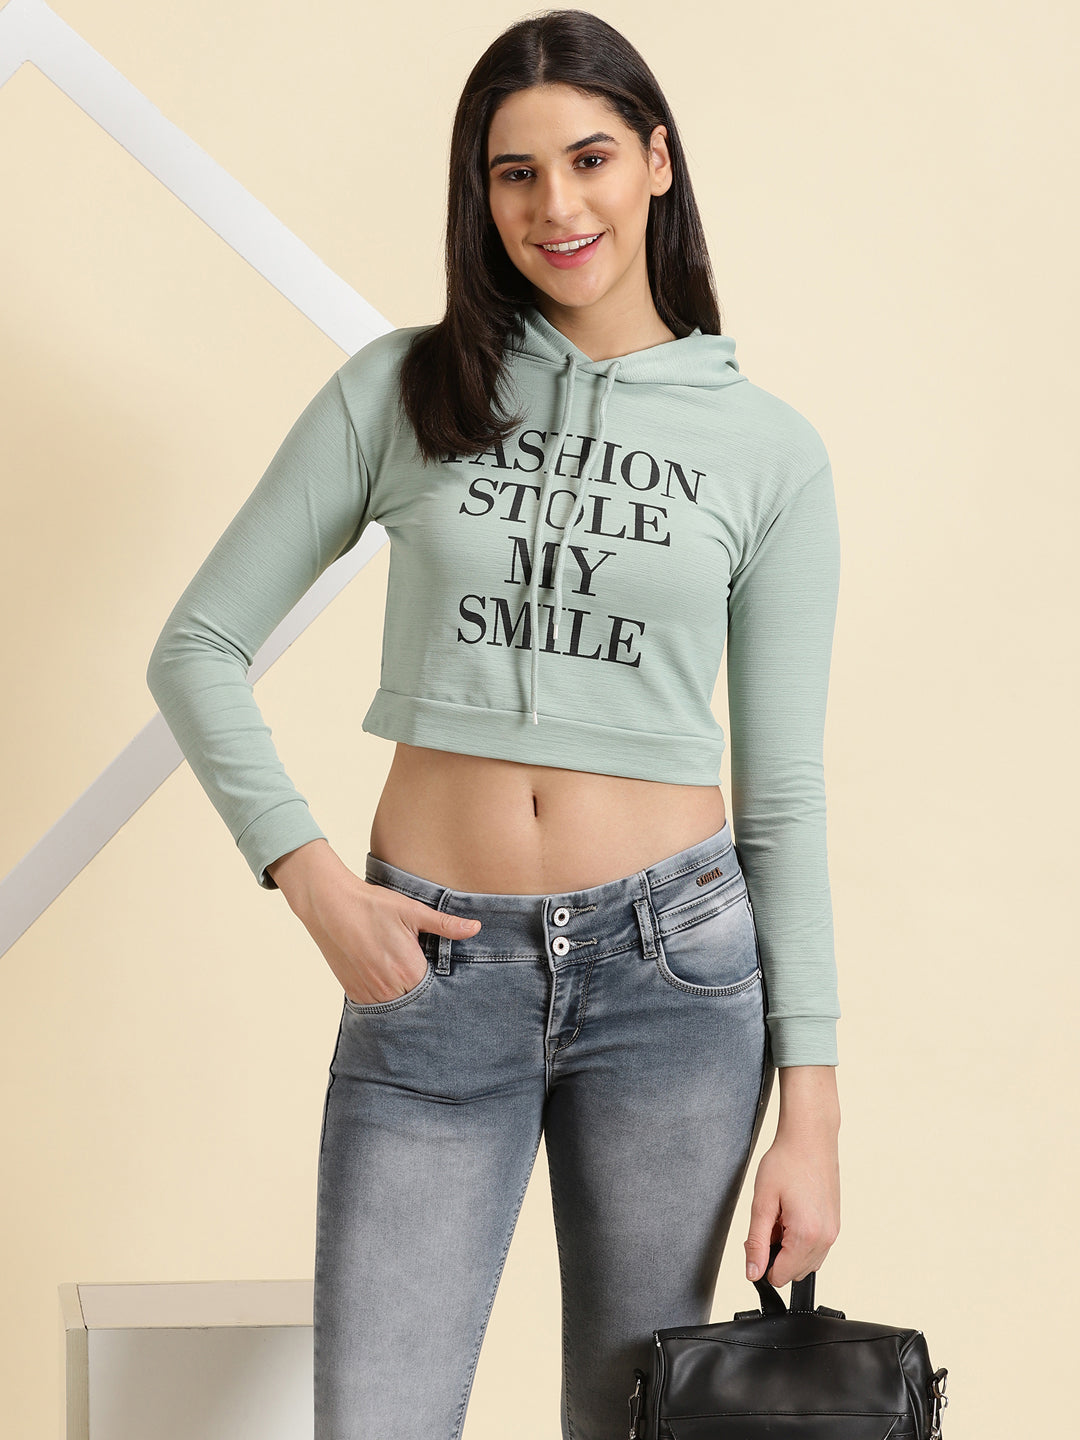 Women's Sea Green Printed Sweatshirt